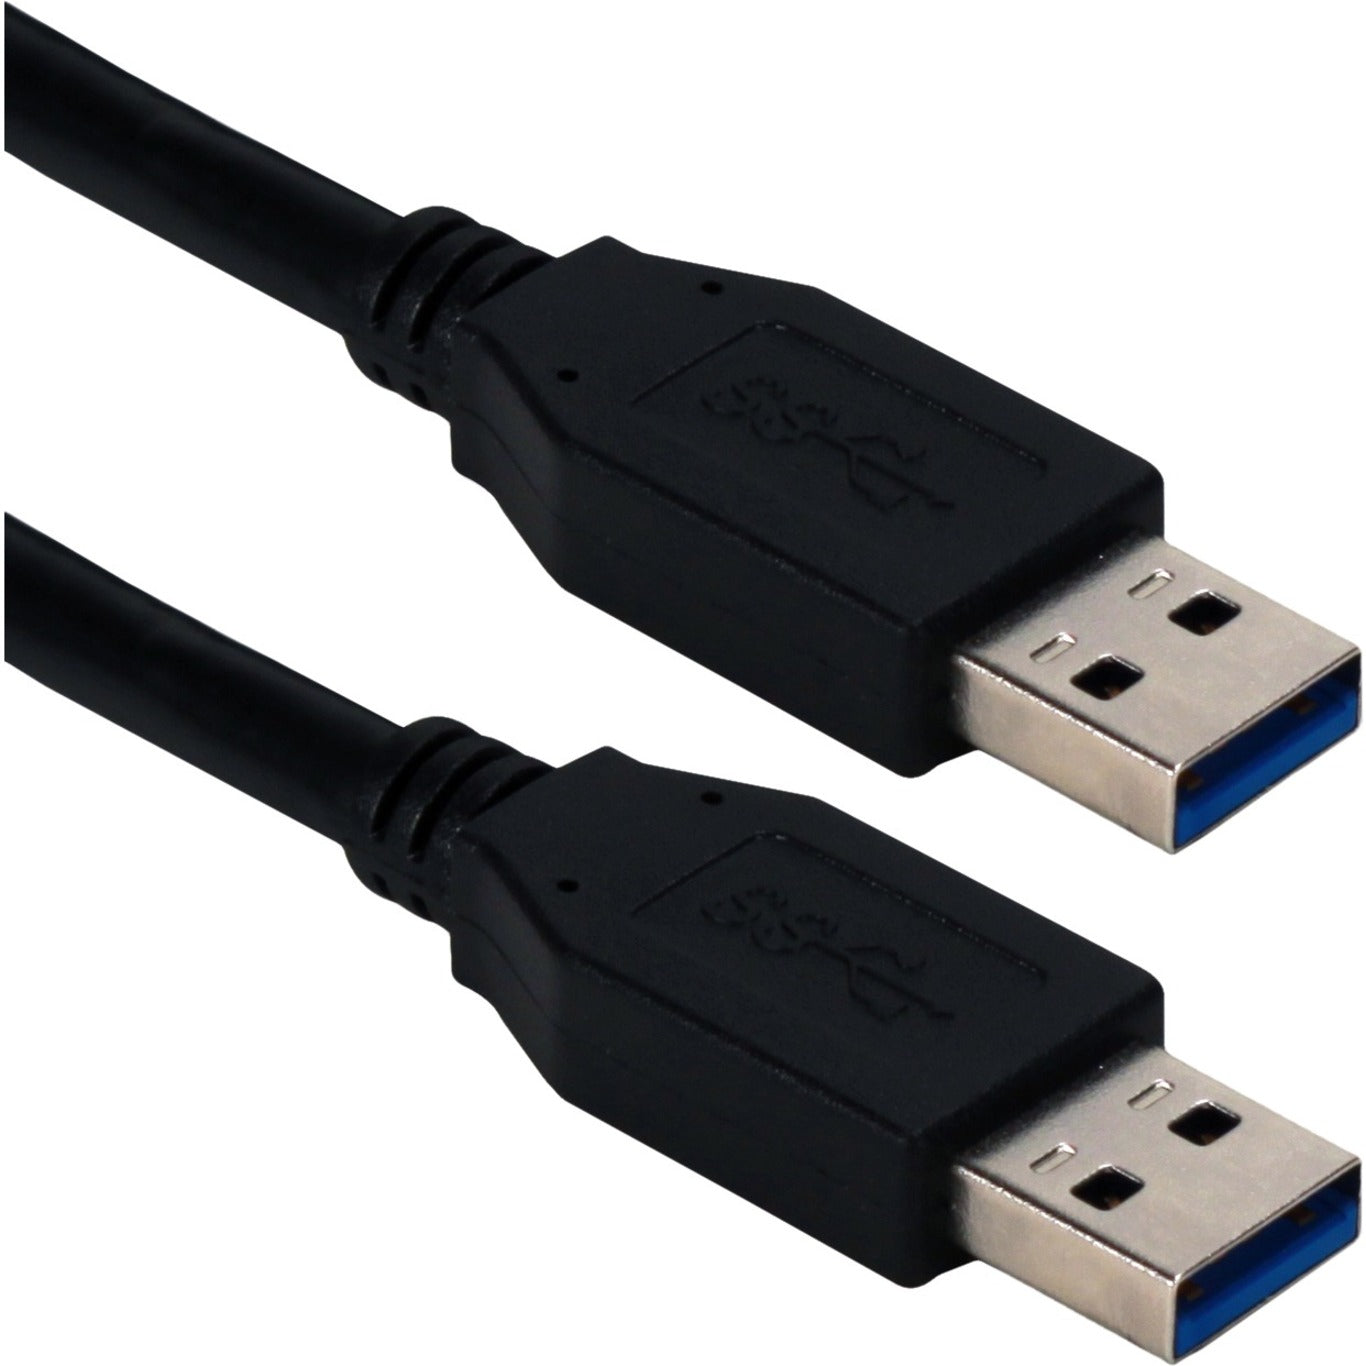 QVS CC2229C-06BK 6ft USB 3.0/3.1 النوع ذكر إلى ذكر كابل أسود، نقل بيانات سريع السرعة العلامة التجارية: QVS